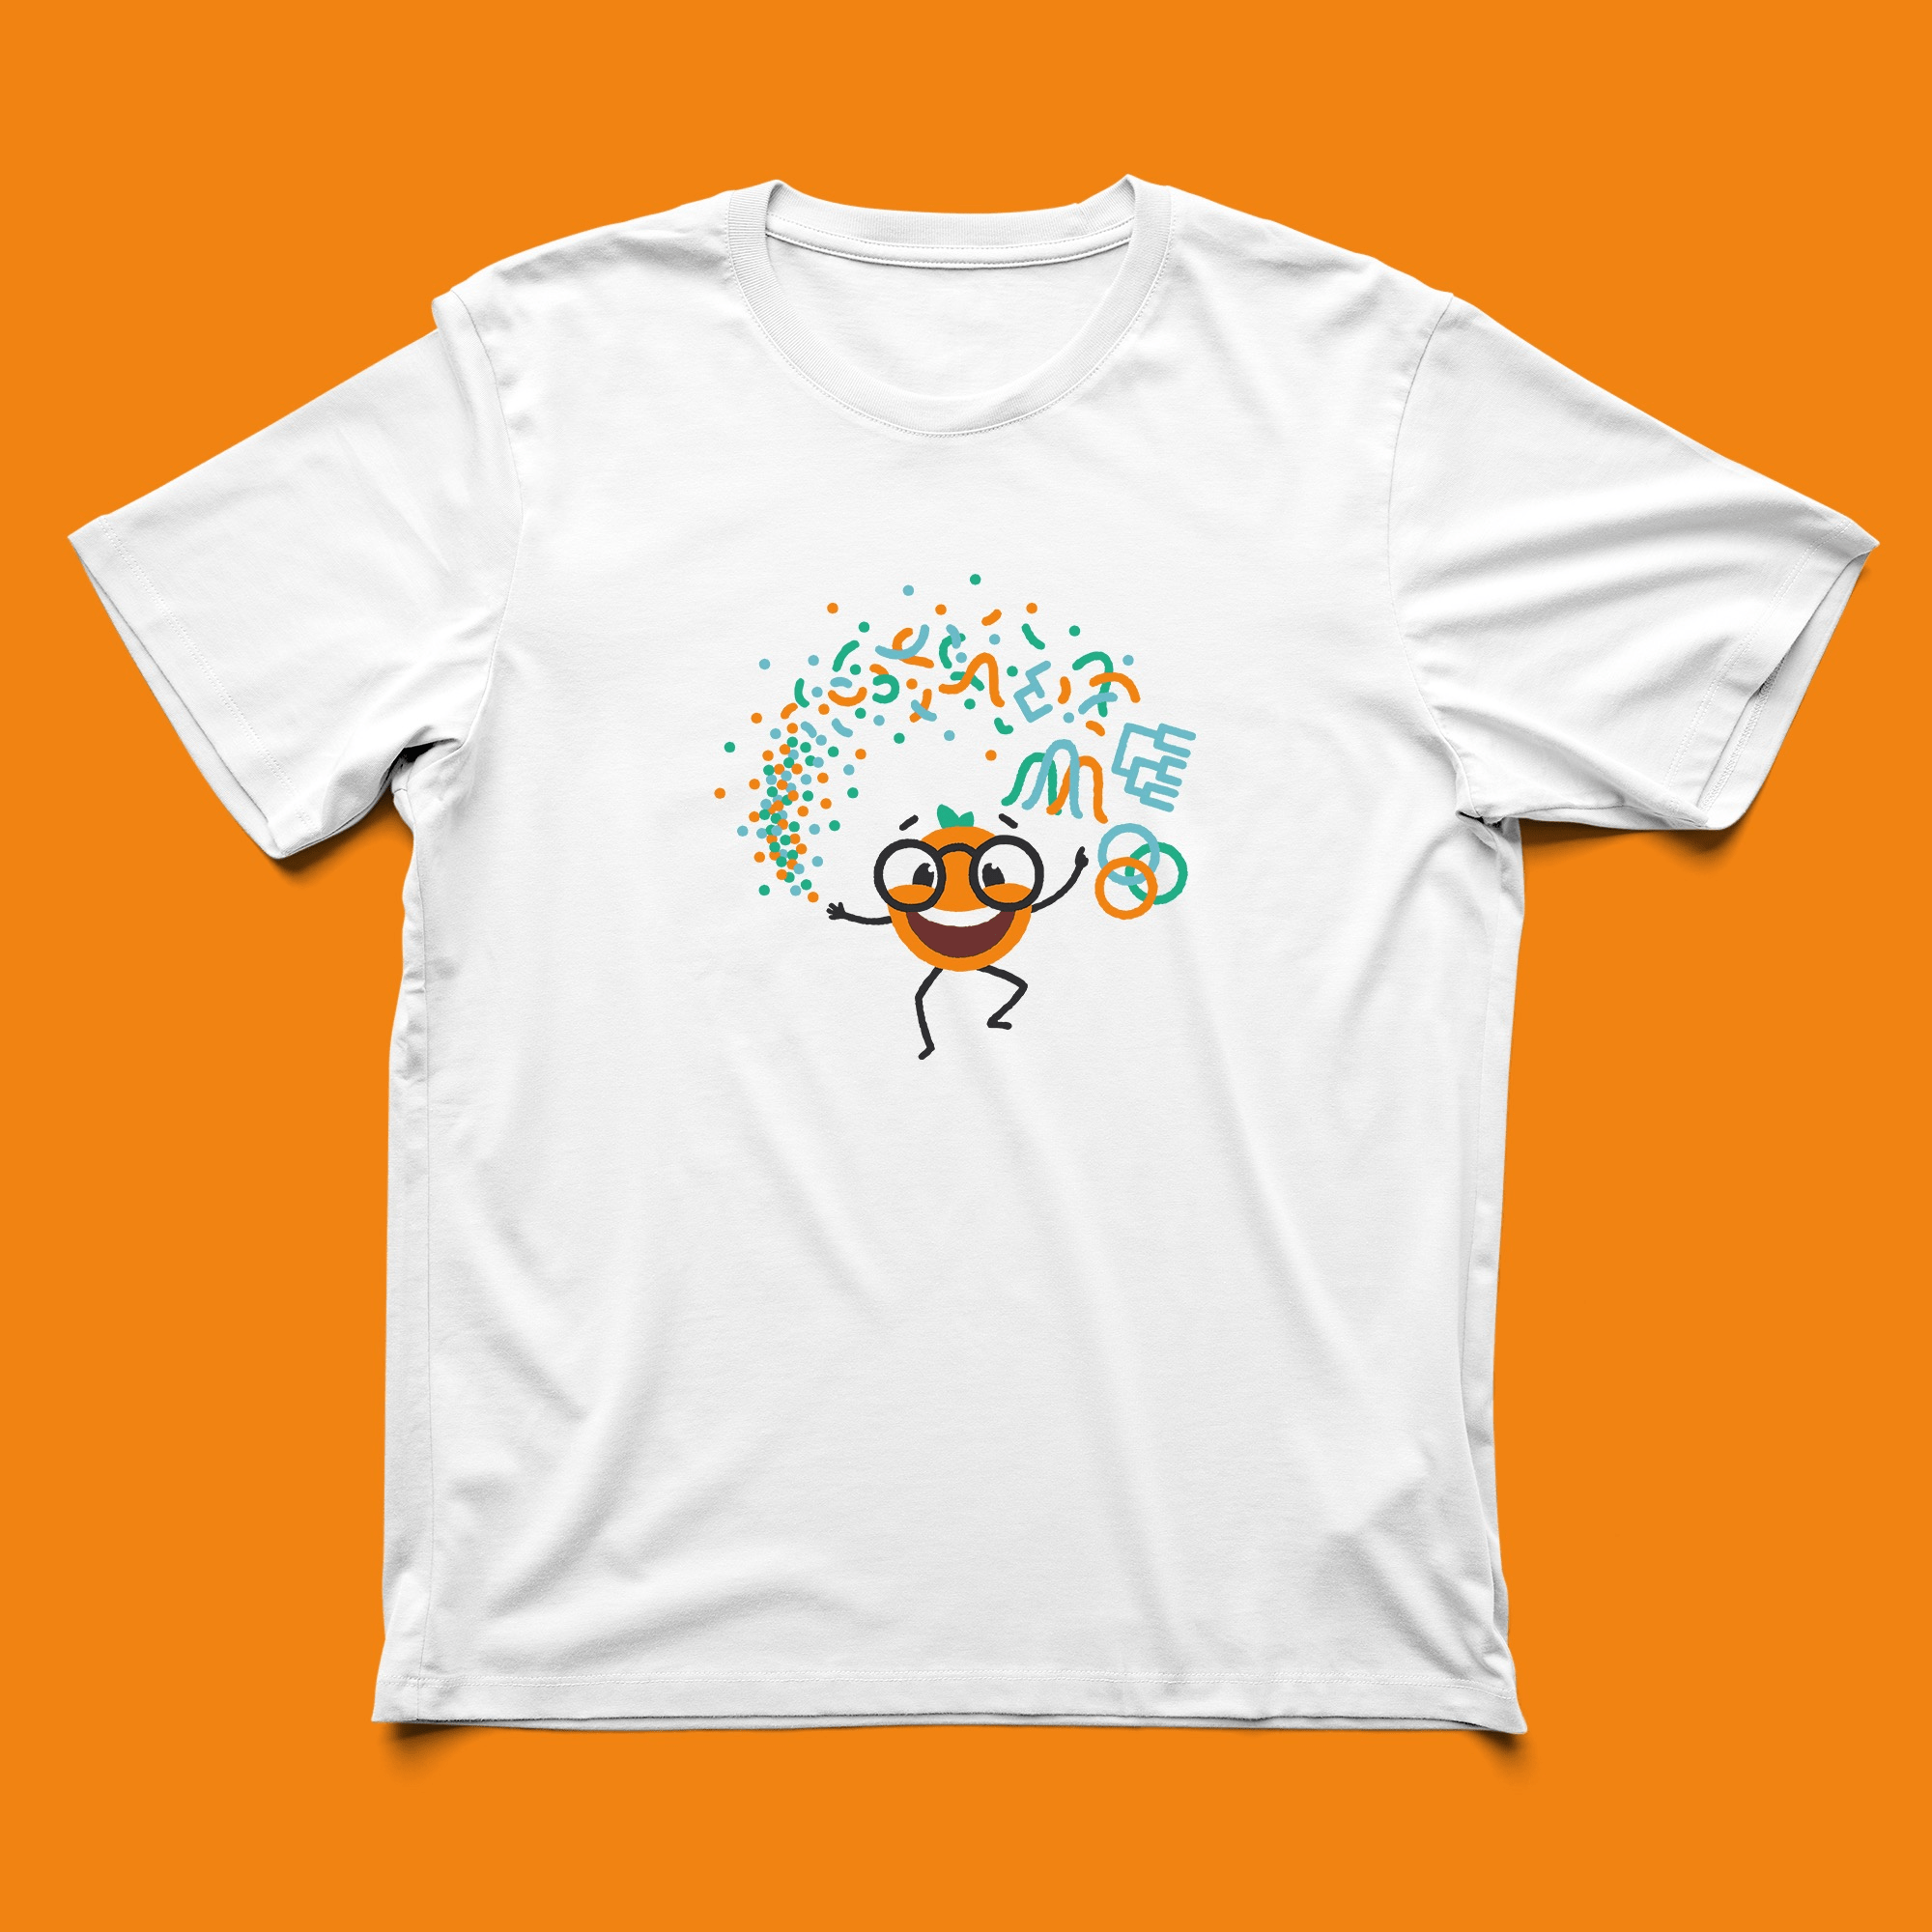 Our Christmas Present: Free Orange T-Shirt!